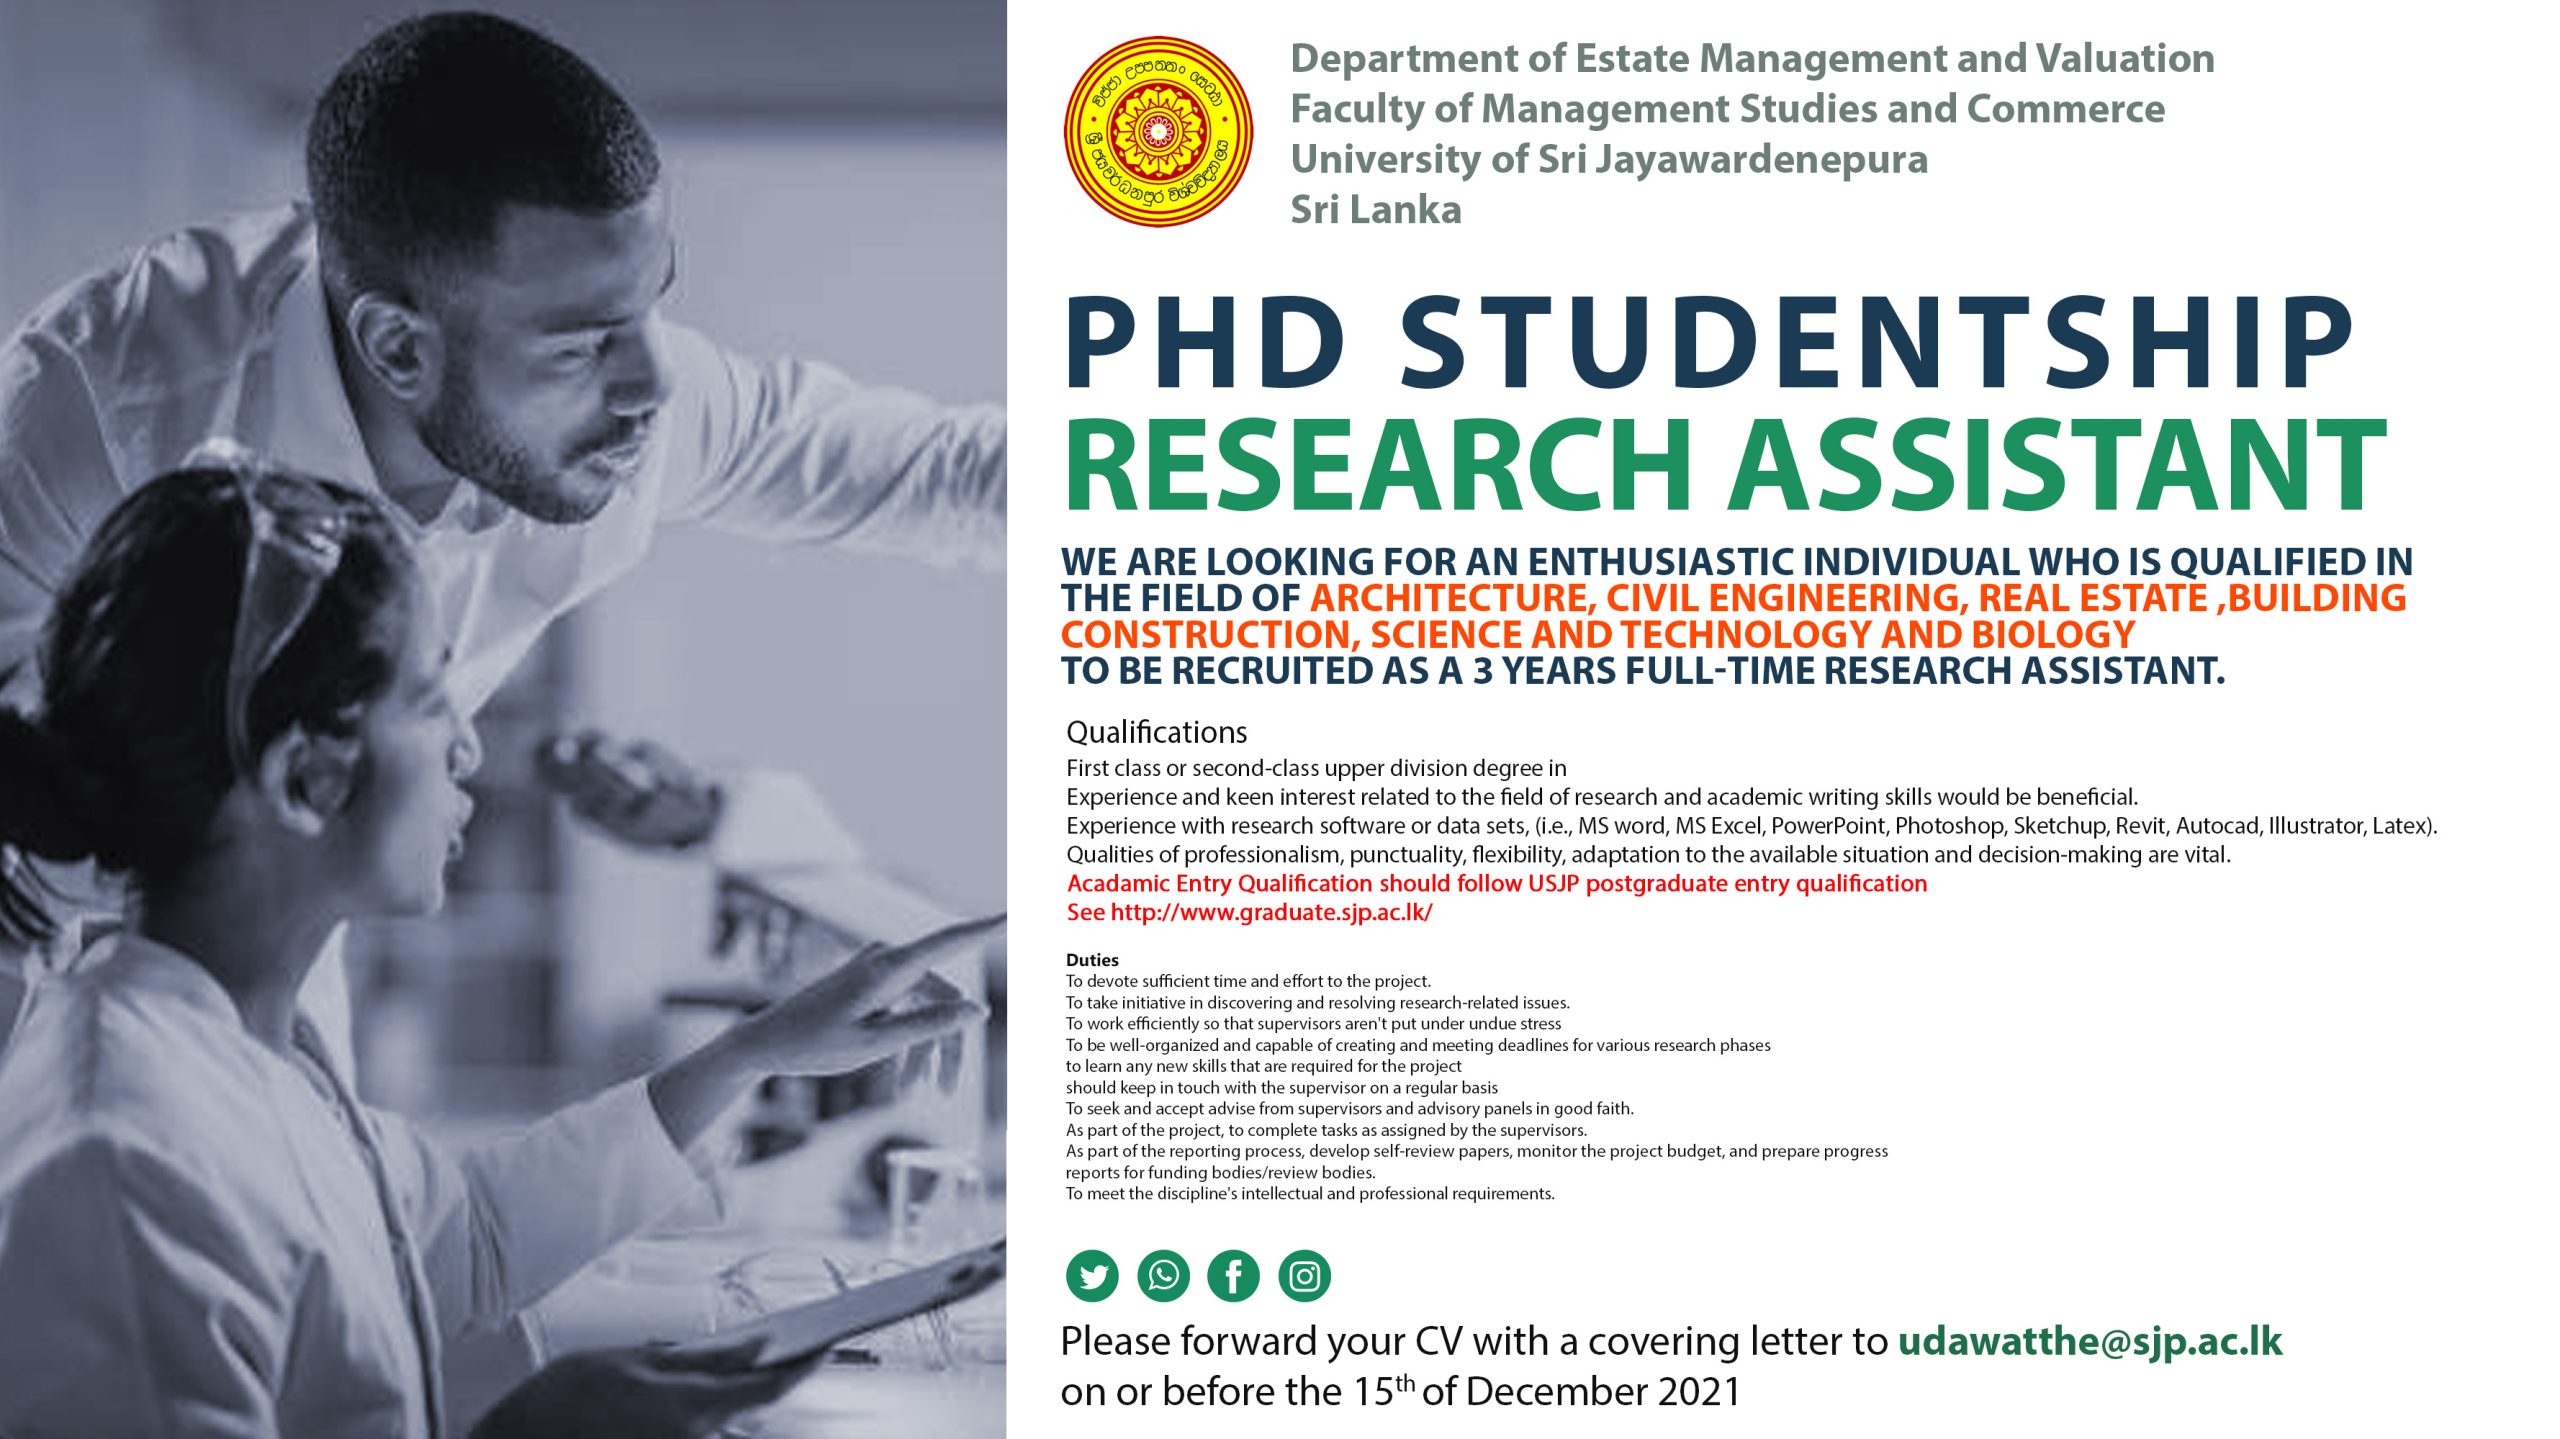 research assistant vacancies in sri lankan universities